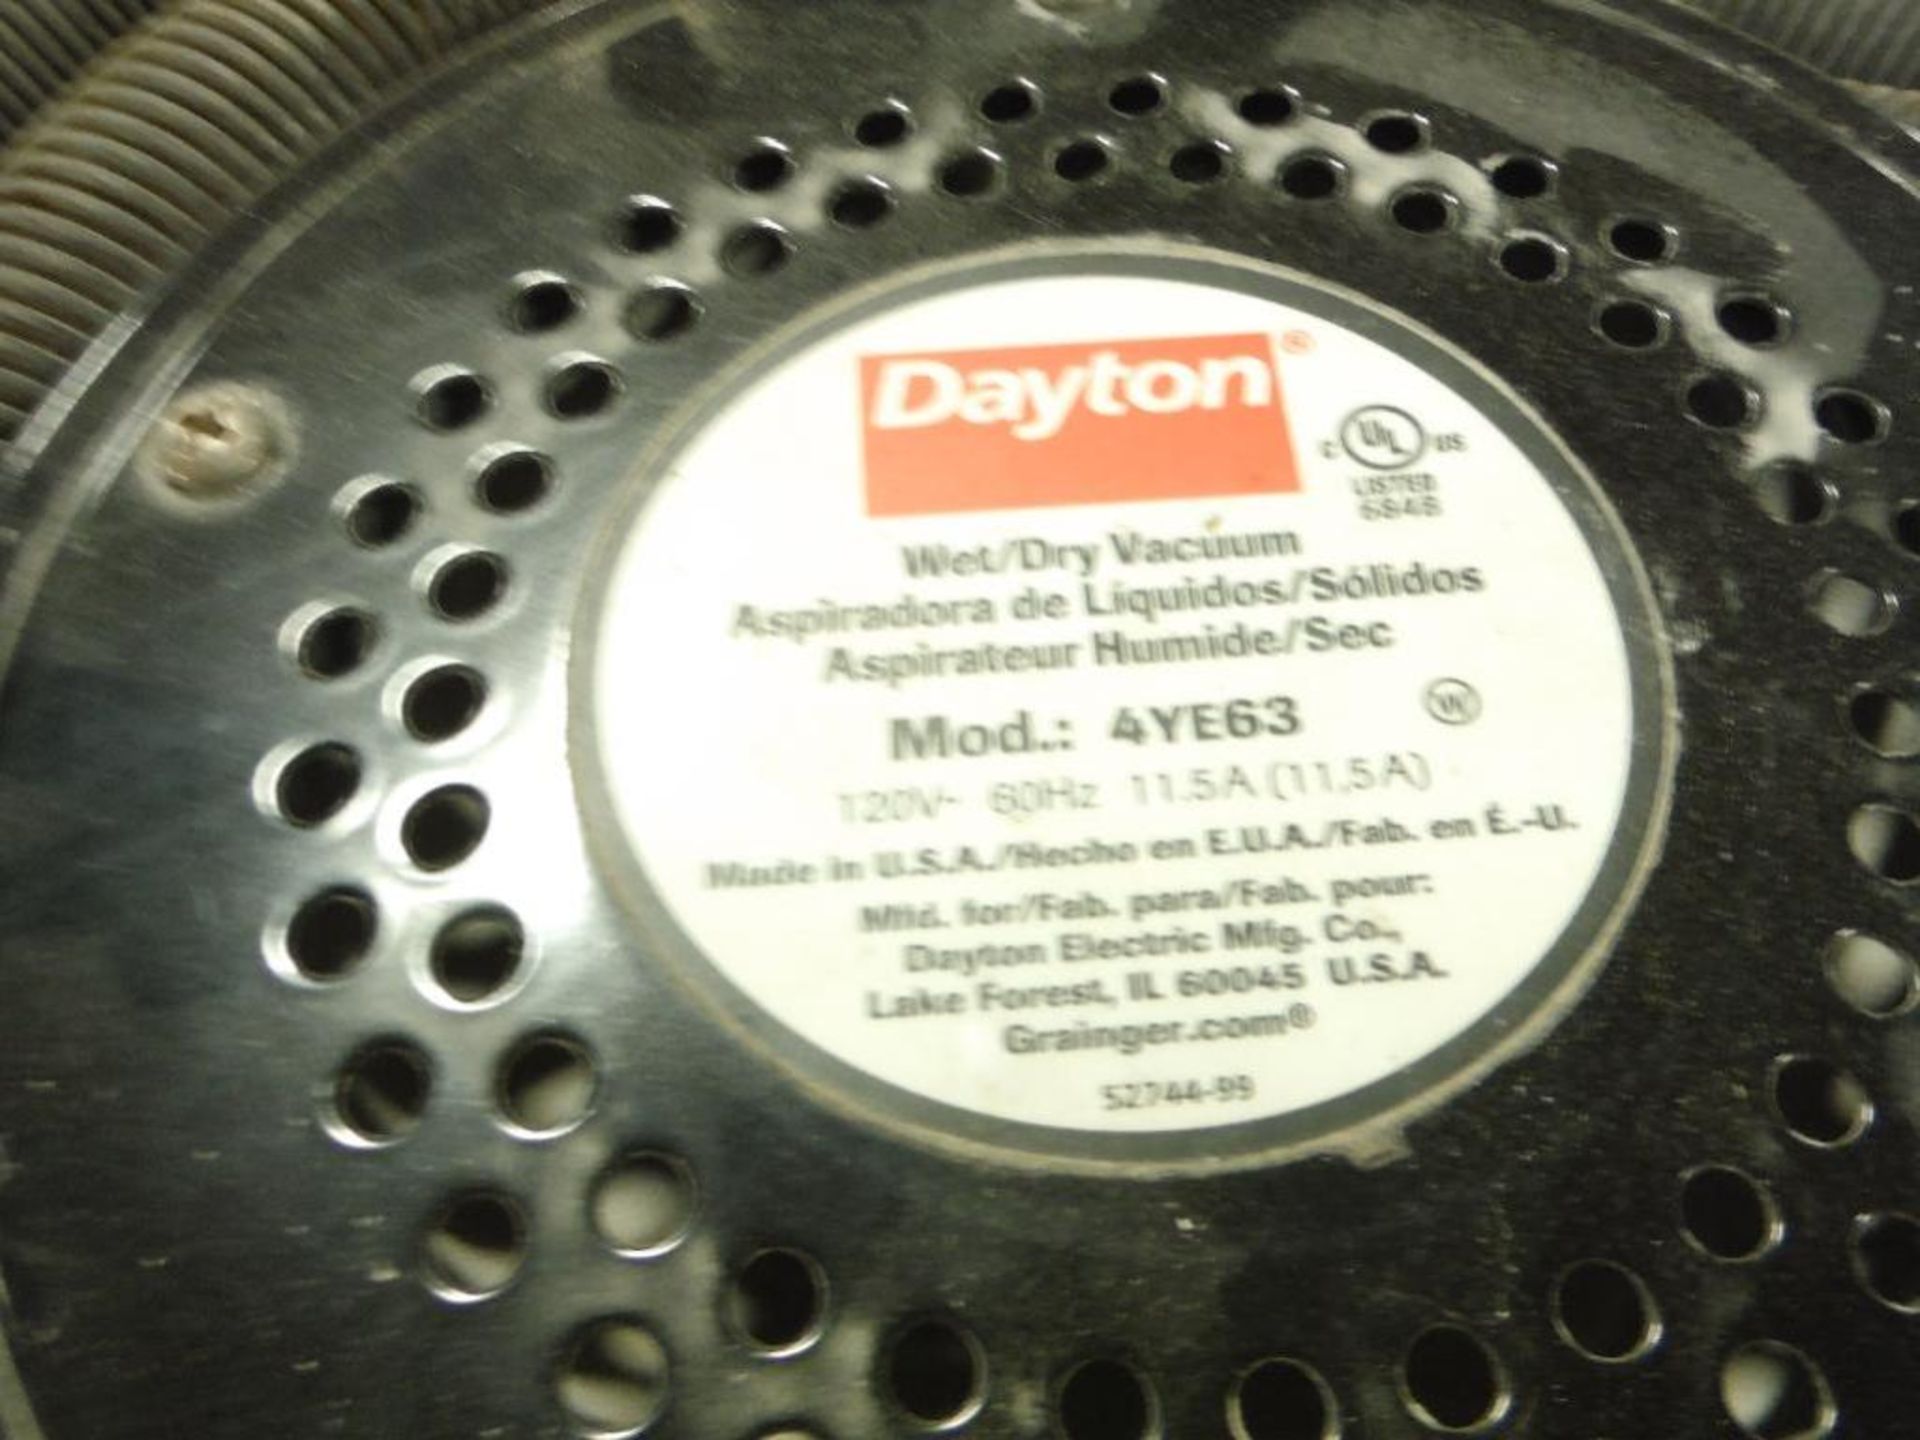 Dayton 55 gal barrel wet dry vac, Model 4YE63. Rigging Fee: $25 - Image 3 of 3